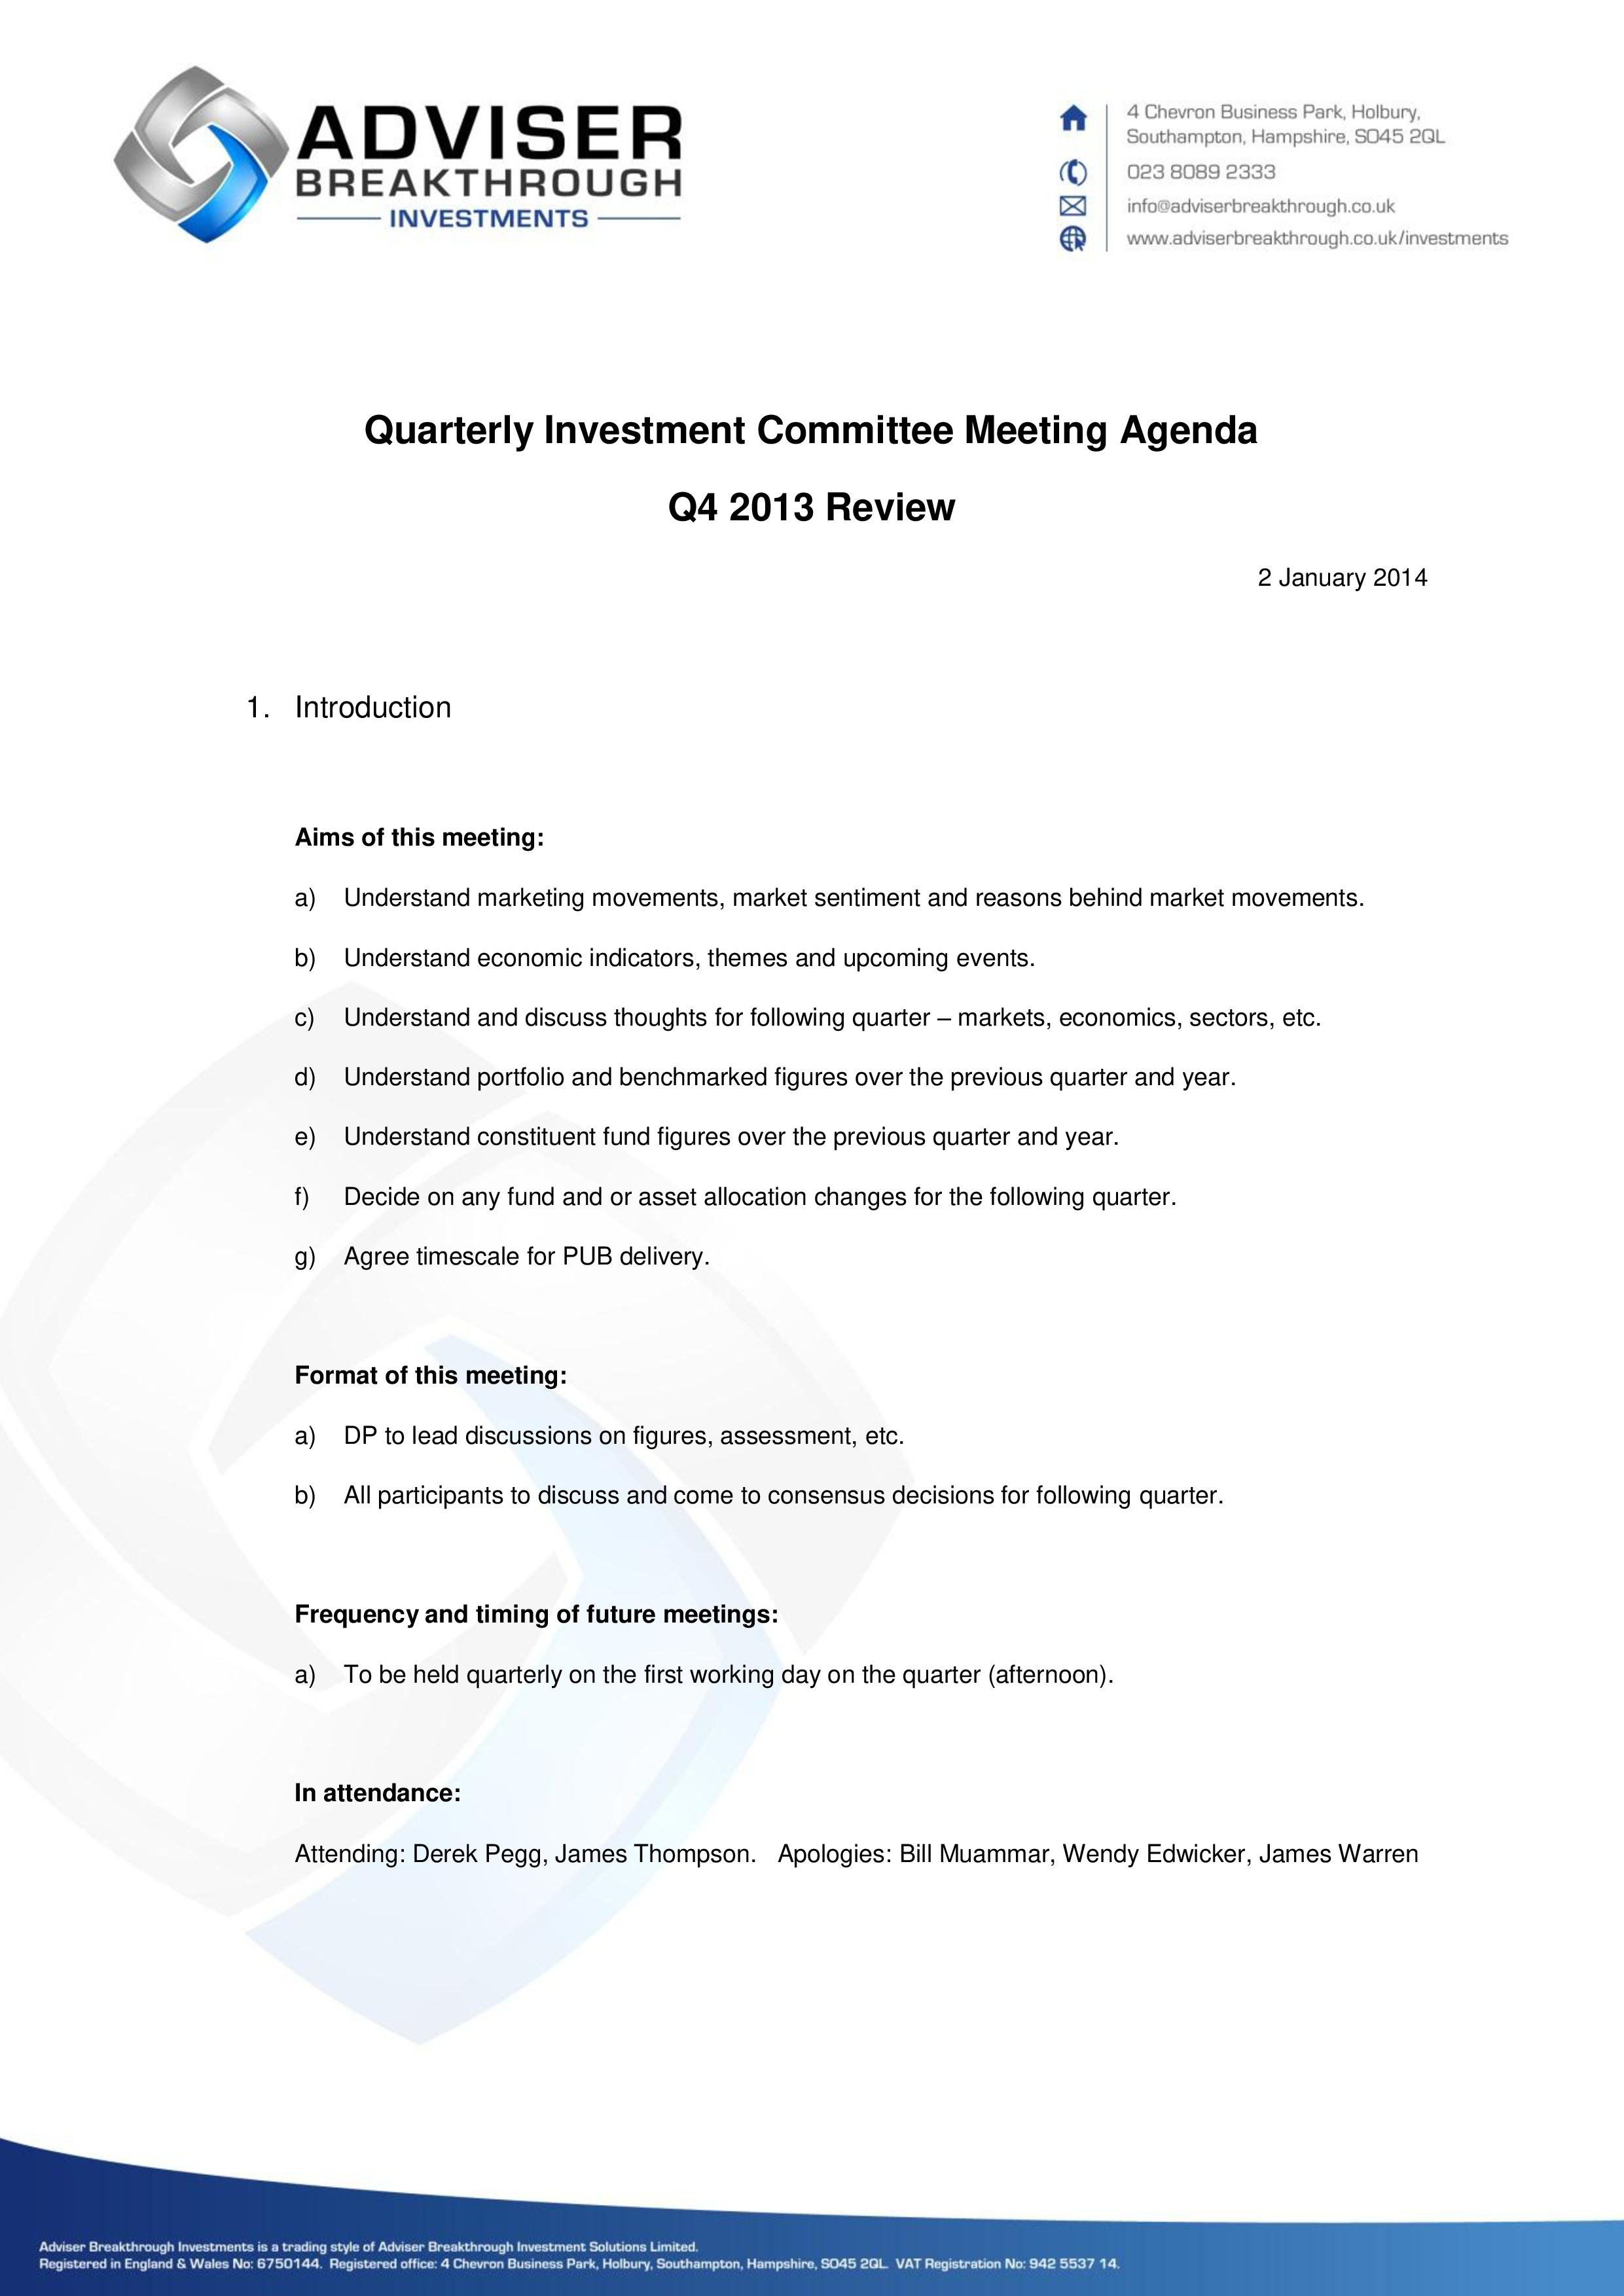 investment committee agenda plantilla imagen principal